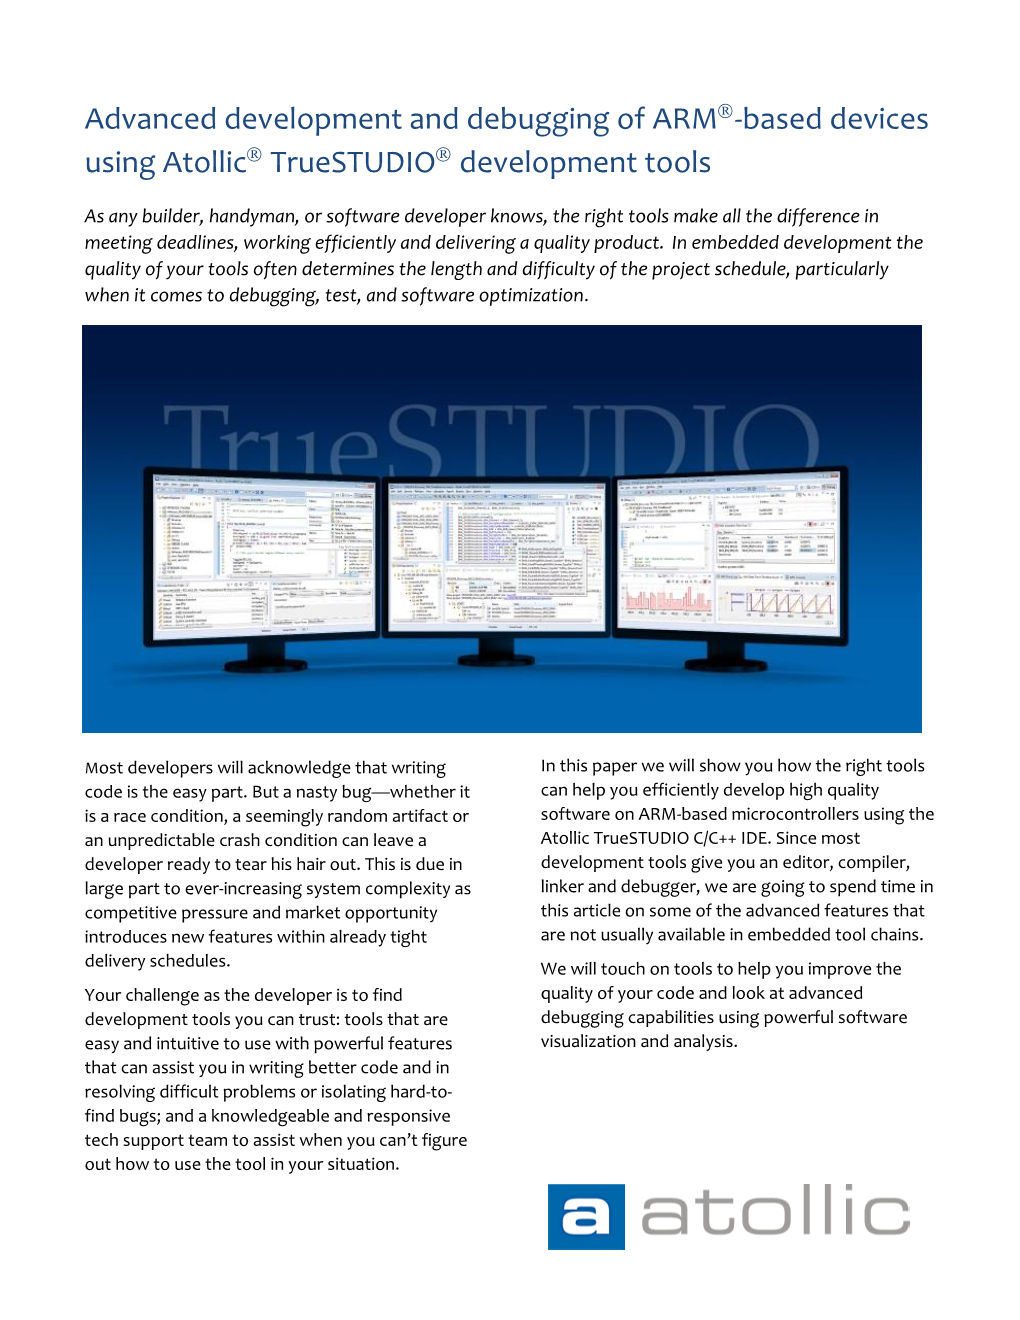 Based Devices Using Atollic Truestudio Development Tools